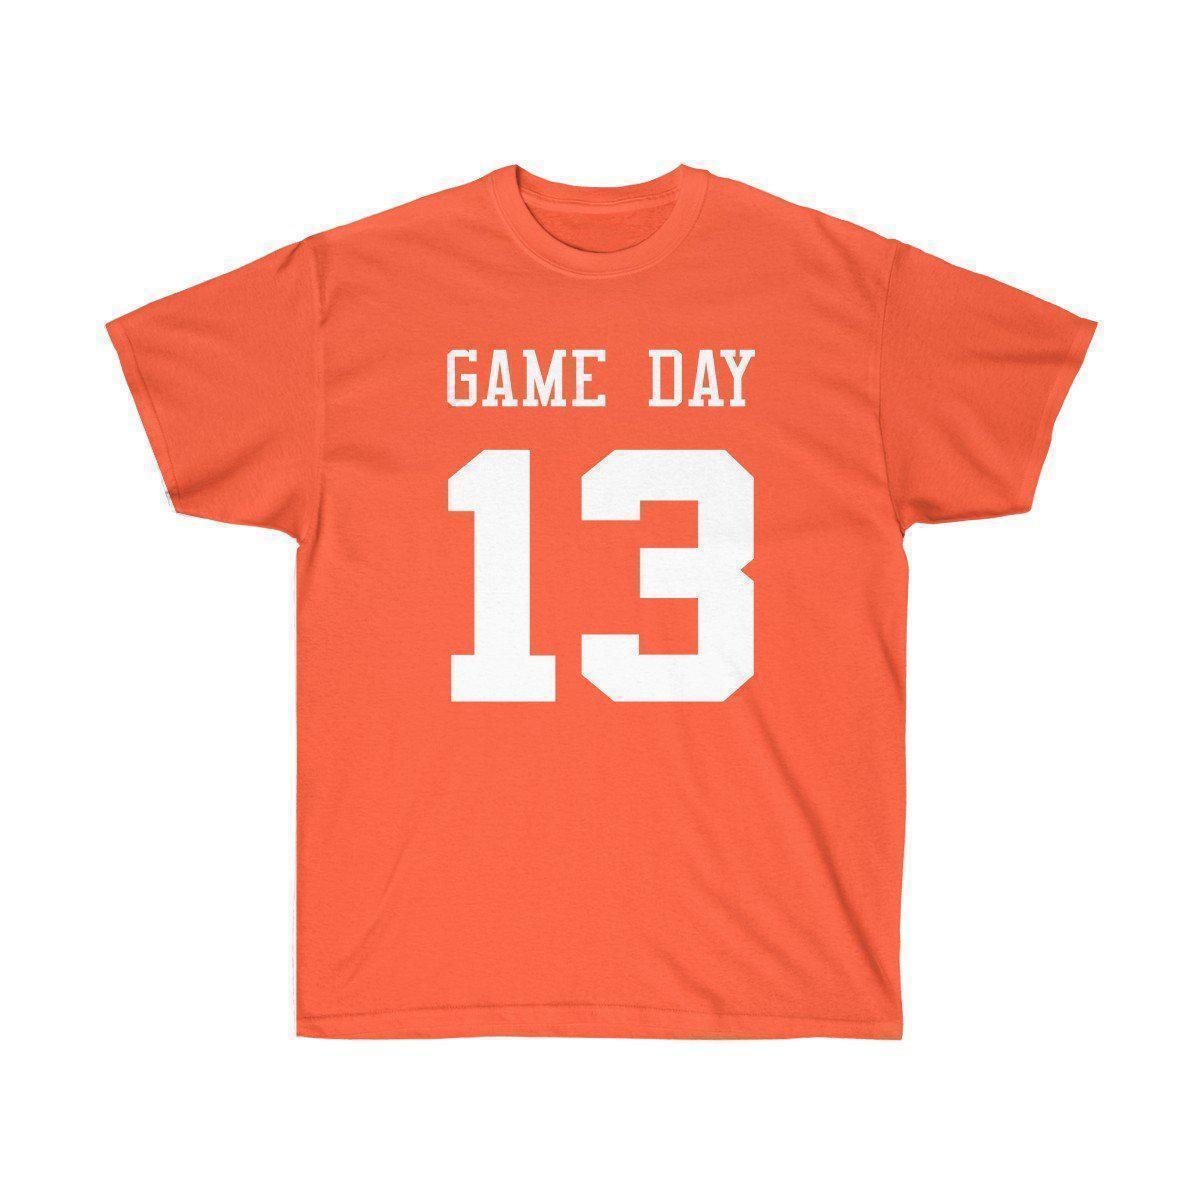 Game Day Tee - Sports T-shirt for Football, Basket, Soccer games-Orange-S-Archethype